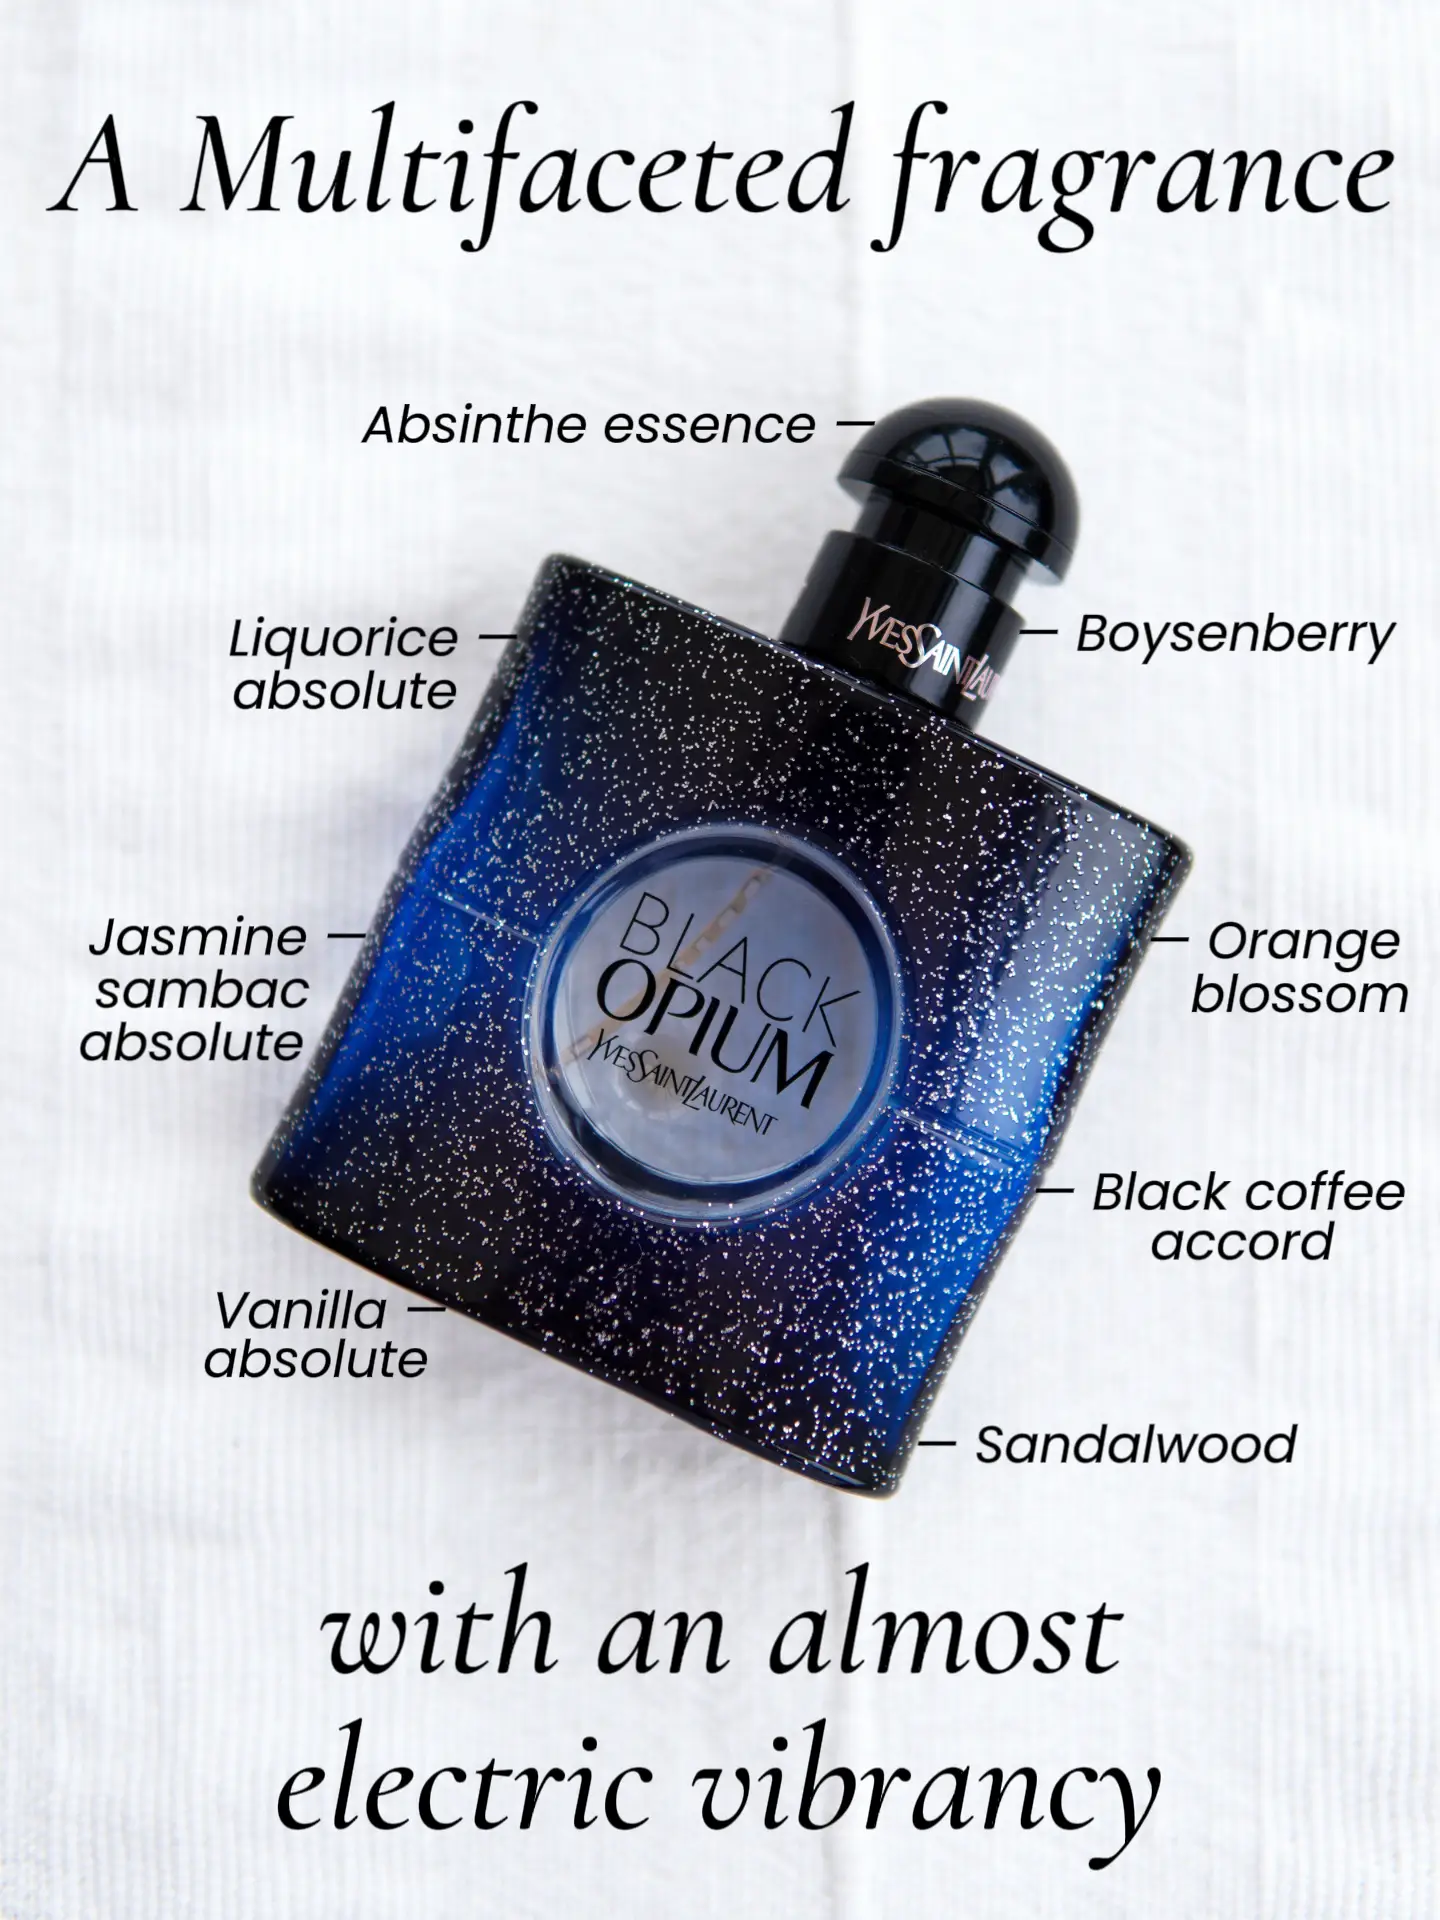 Black Opium Intense Perfume - Women's Fragrances - YSL Beauty